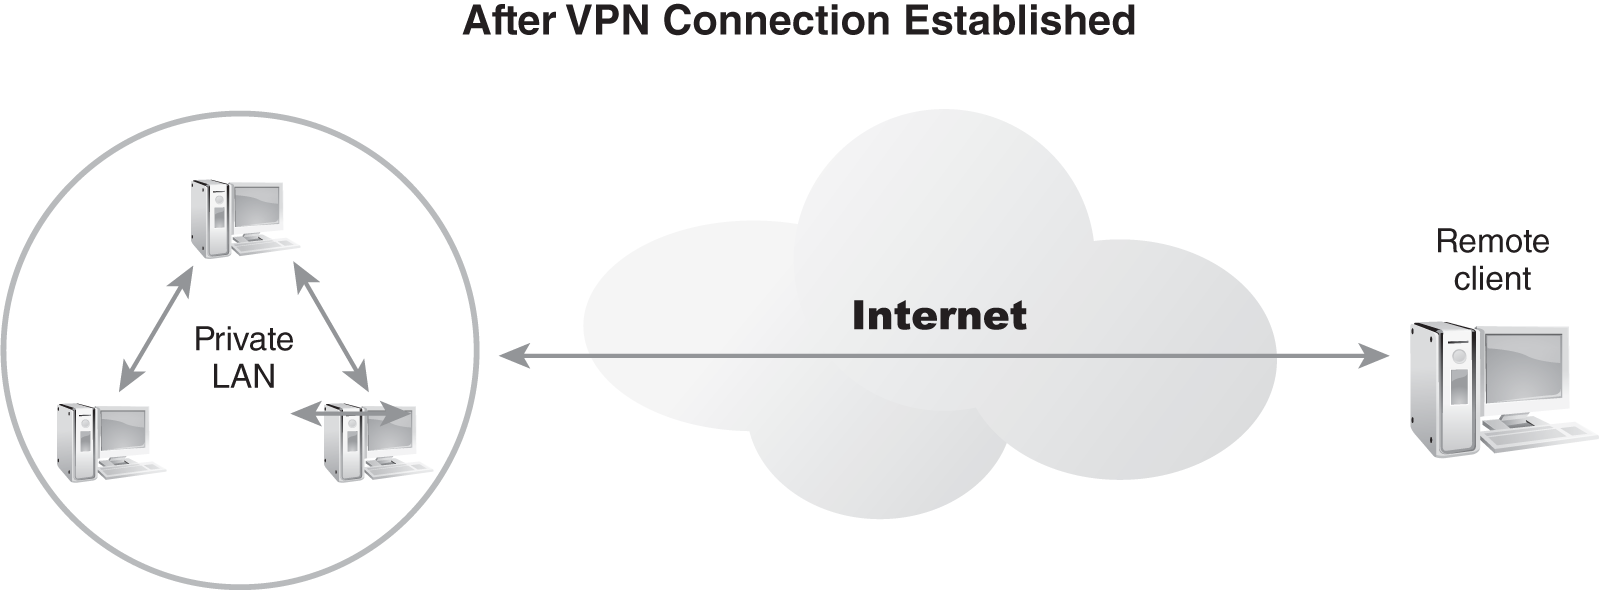 A diagram illustrates a V P N established between a remote client and a LAN over the Internet after V P N connection is established.